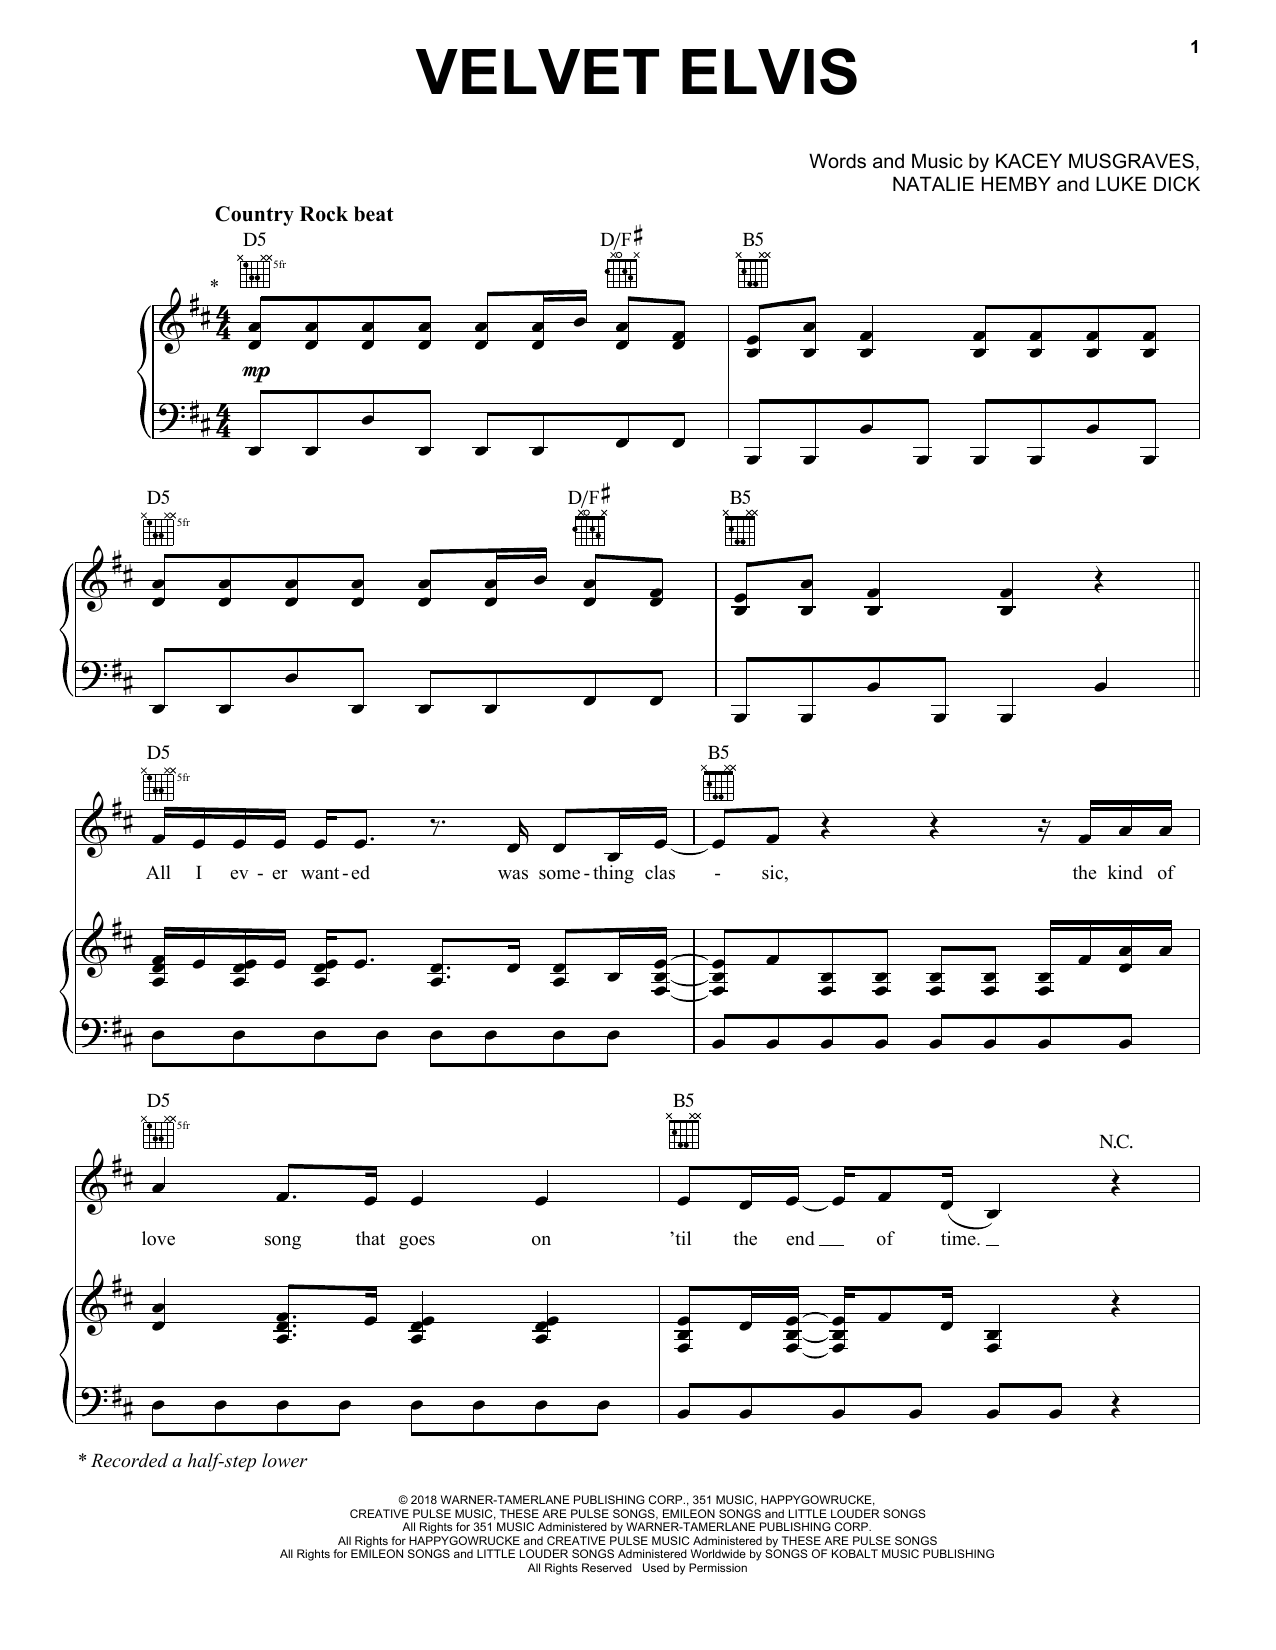 Kacey Musgraves Velvet Elvis Sheet Music Notes & Chords for Easy Piano - Download or Print PDF